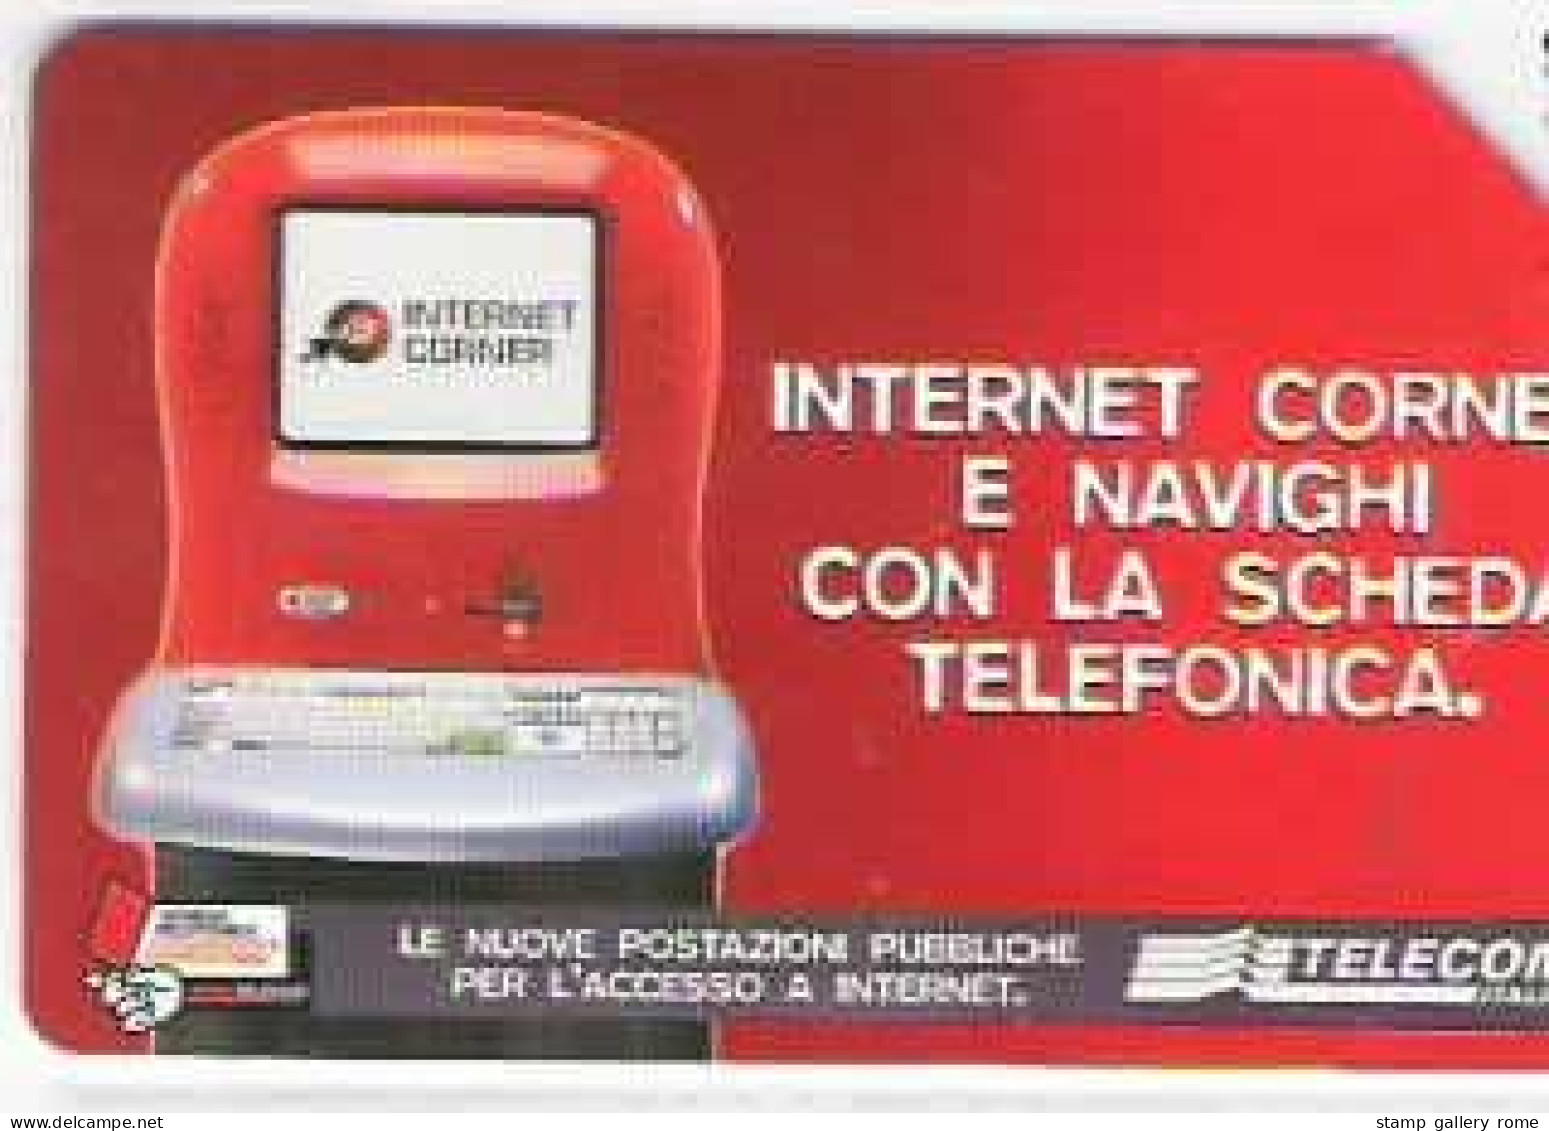 TELECOM - INTERNET CORNER - USATA -  LIRE 5000  - GOLDEN  1382 - Public Practical Advertising